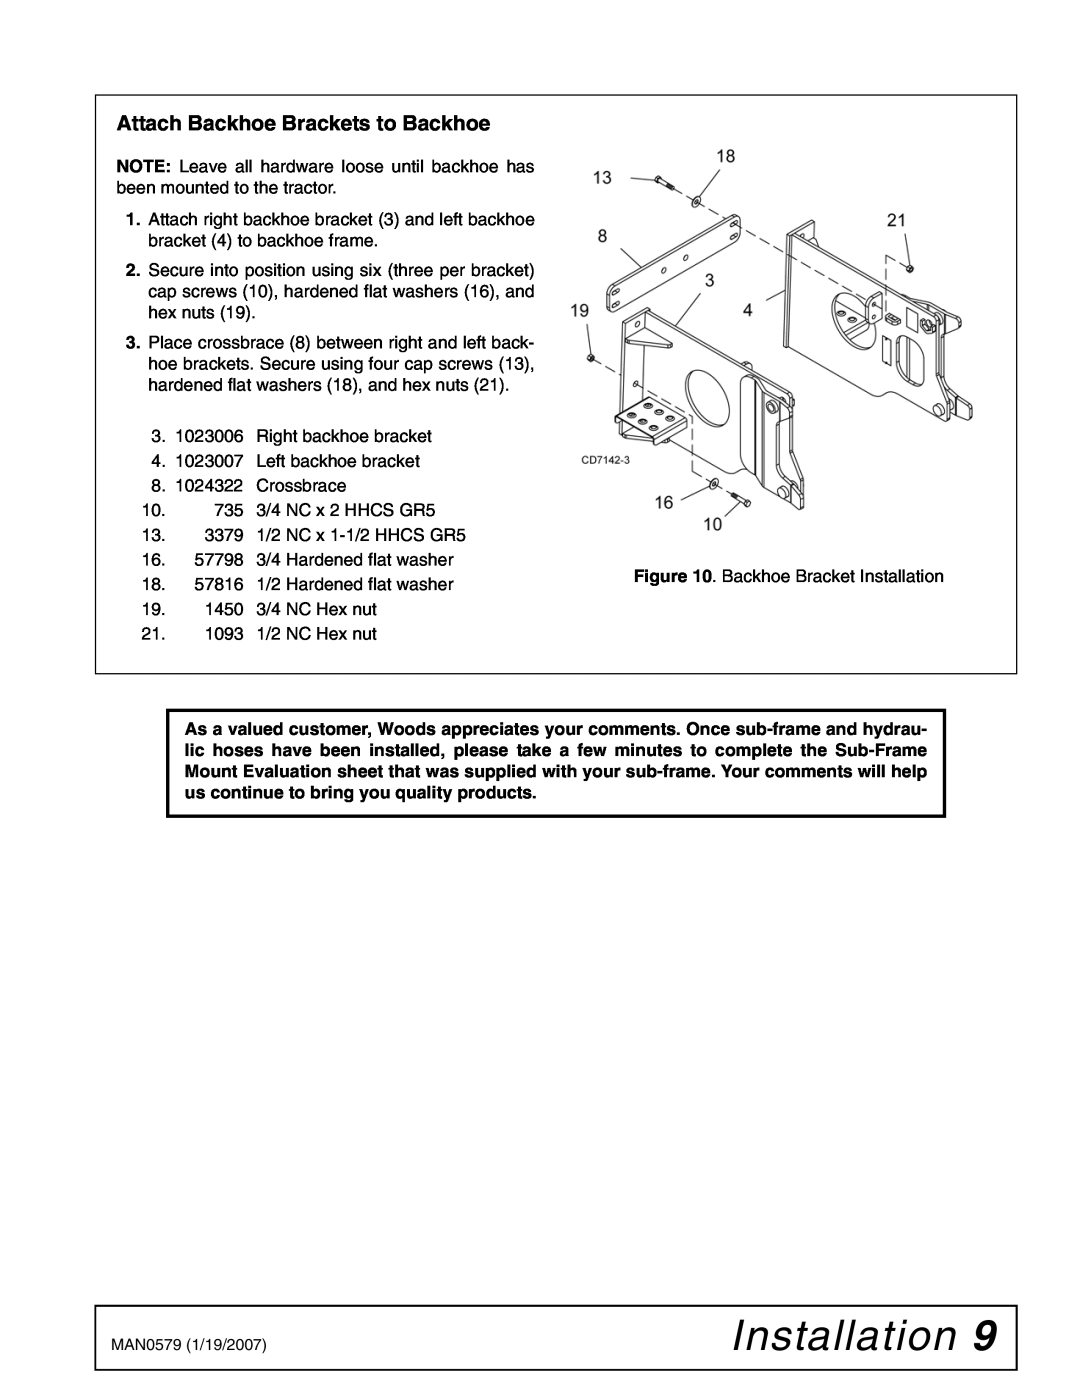 Woods Equipment 1023000 installation manual Attach Backhoe Brackets to Backhoe, Installation 